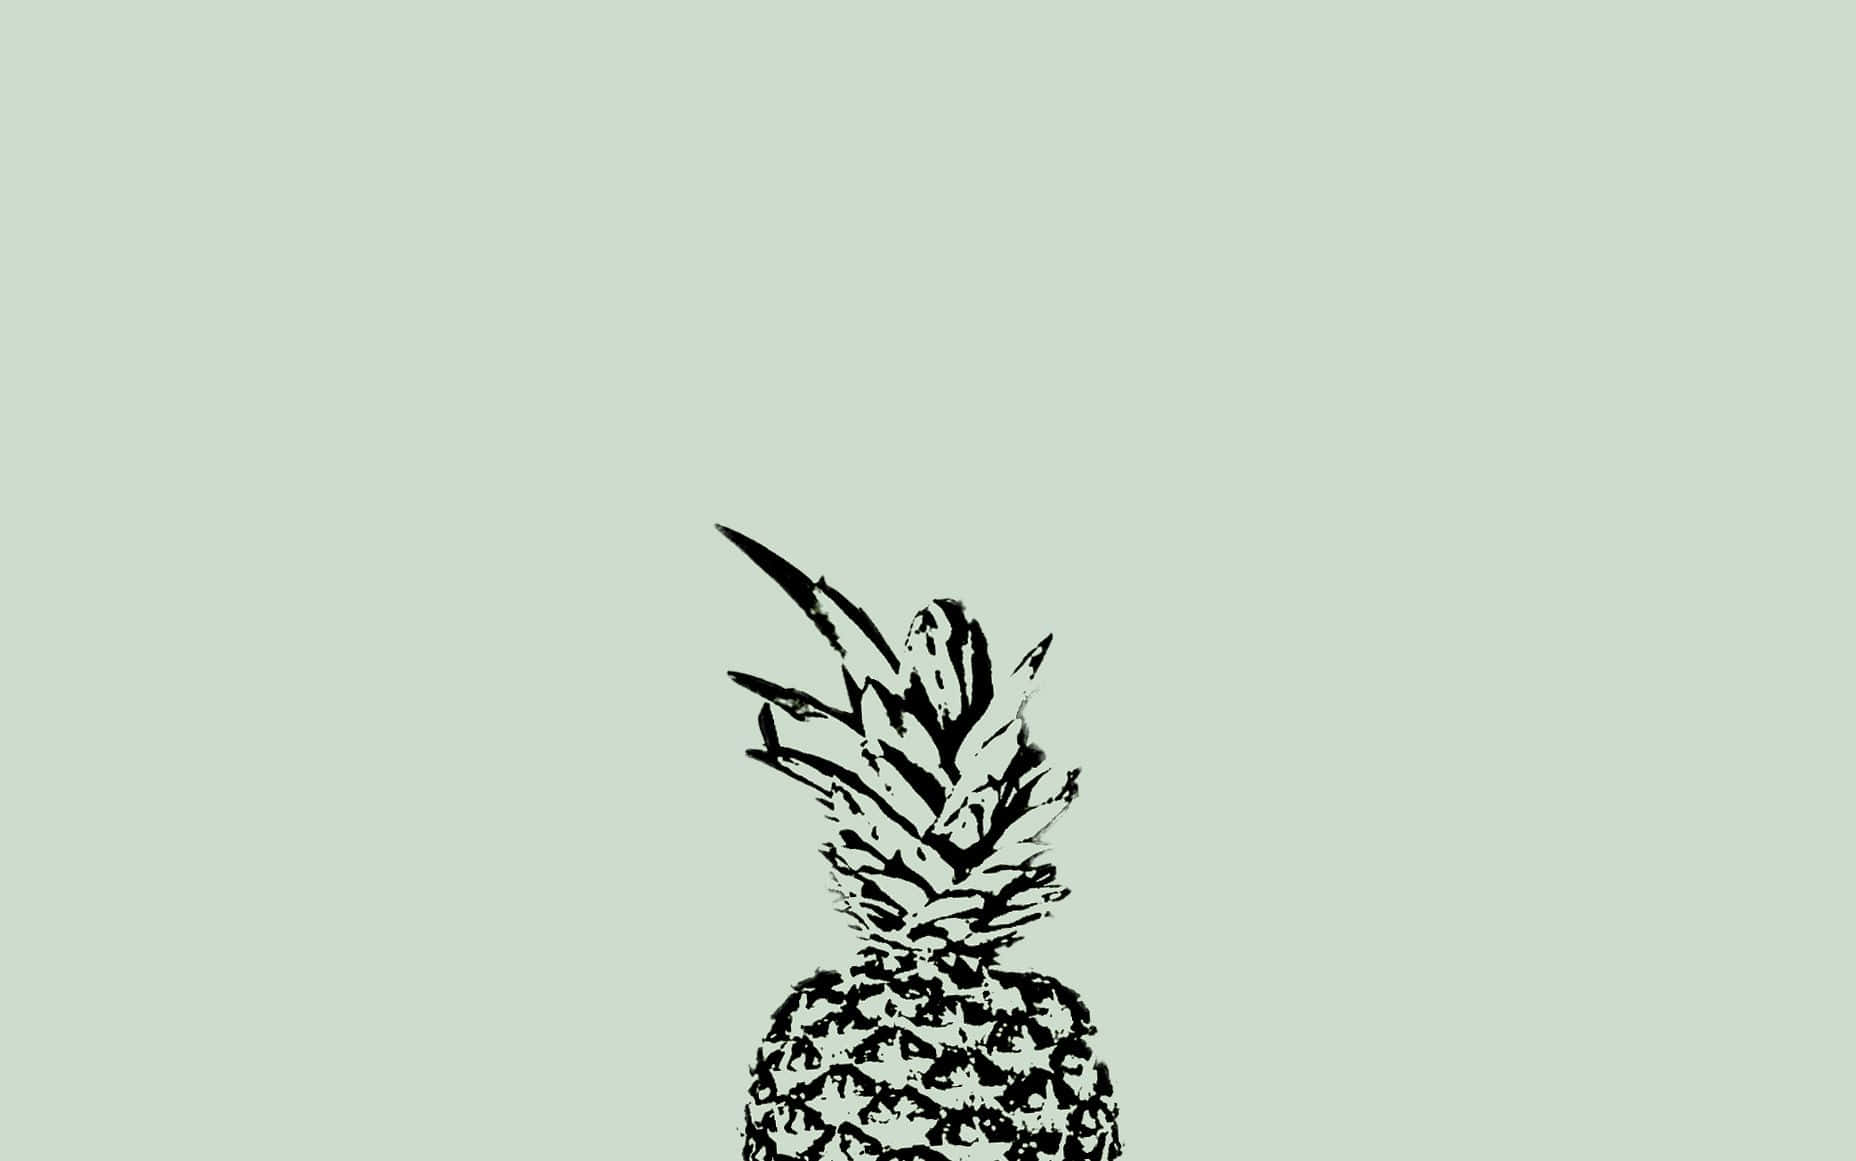 Get som Pineapple Power to your Desktop Wallpaper